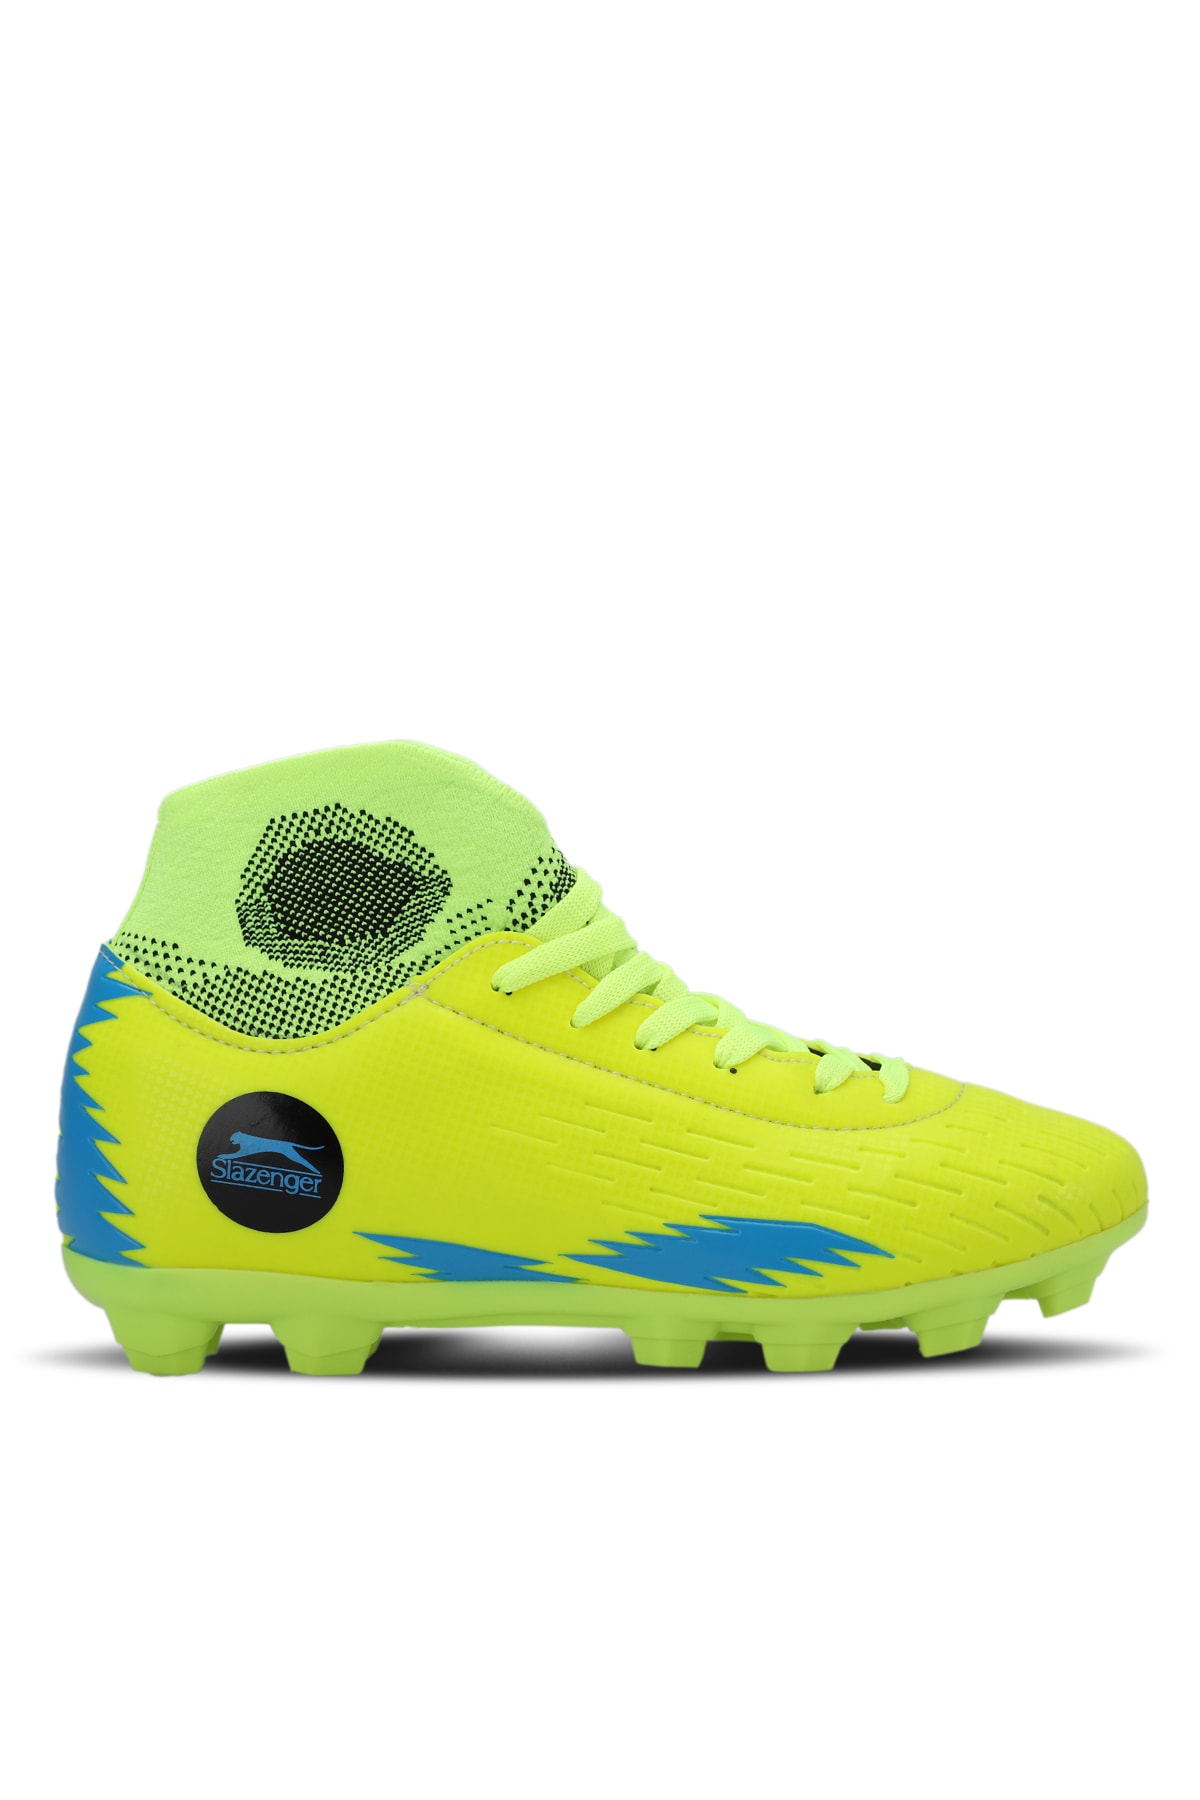 Slazenger Hadas Krp Football Men's Astroturf Shoes Neon Yellow.